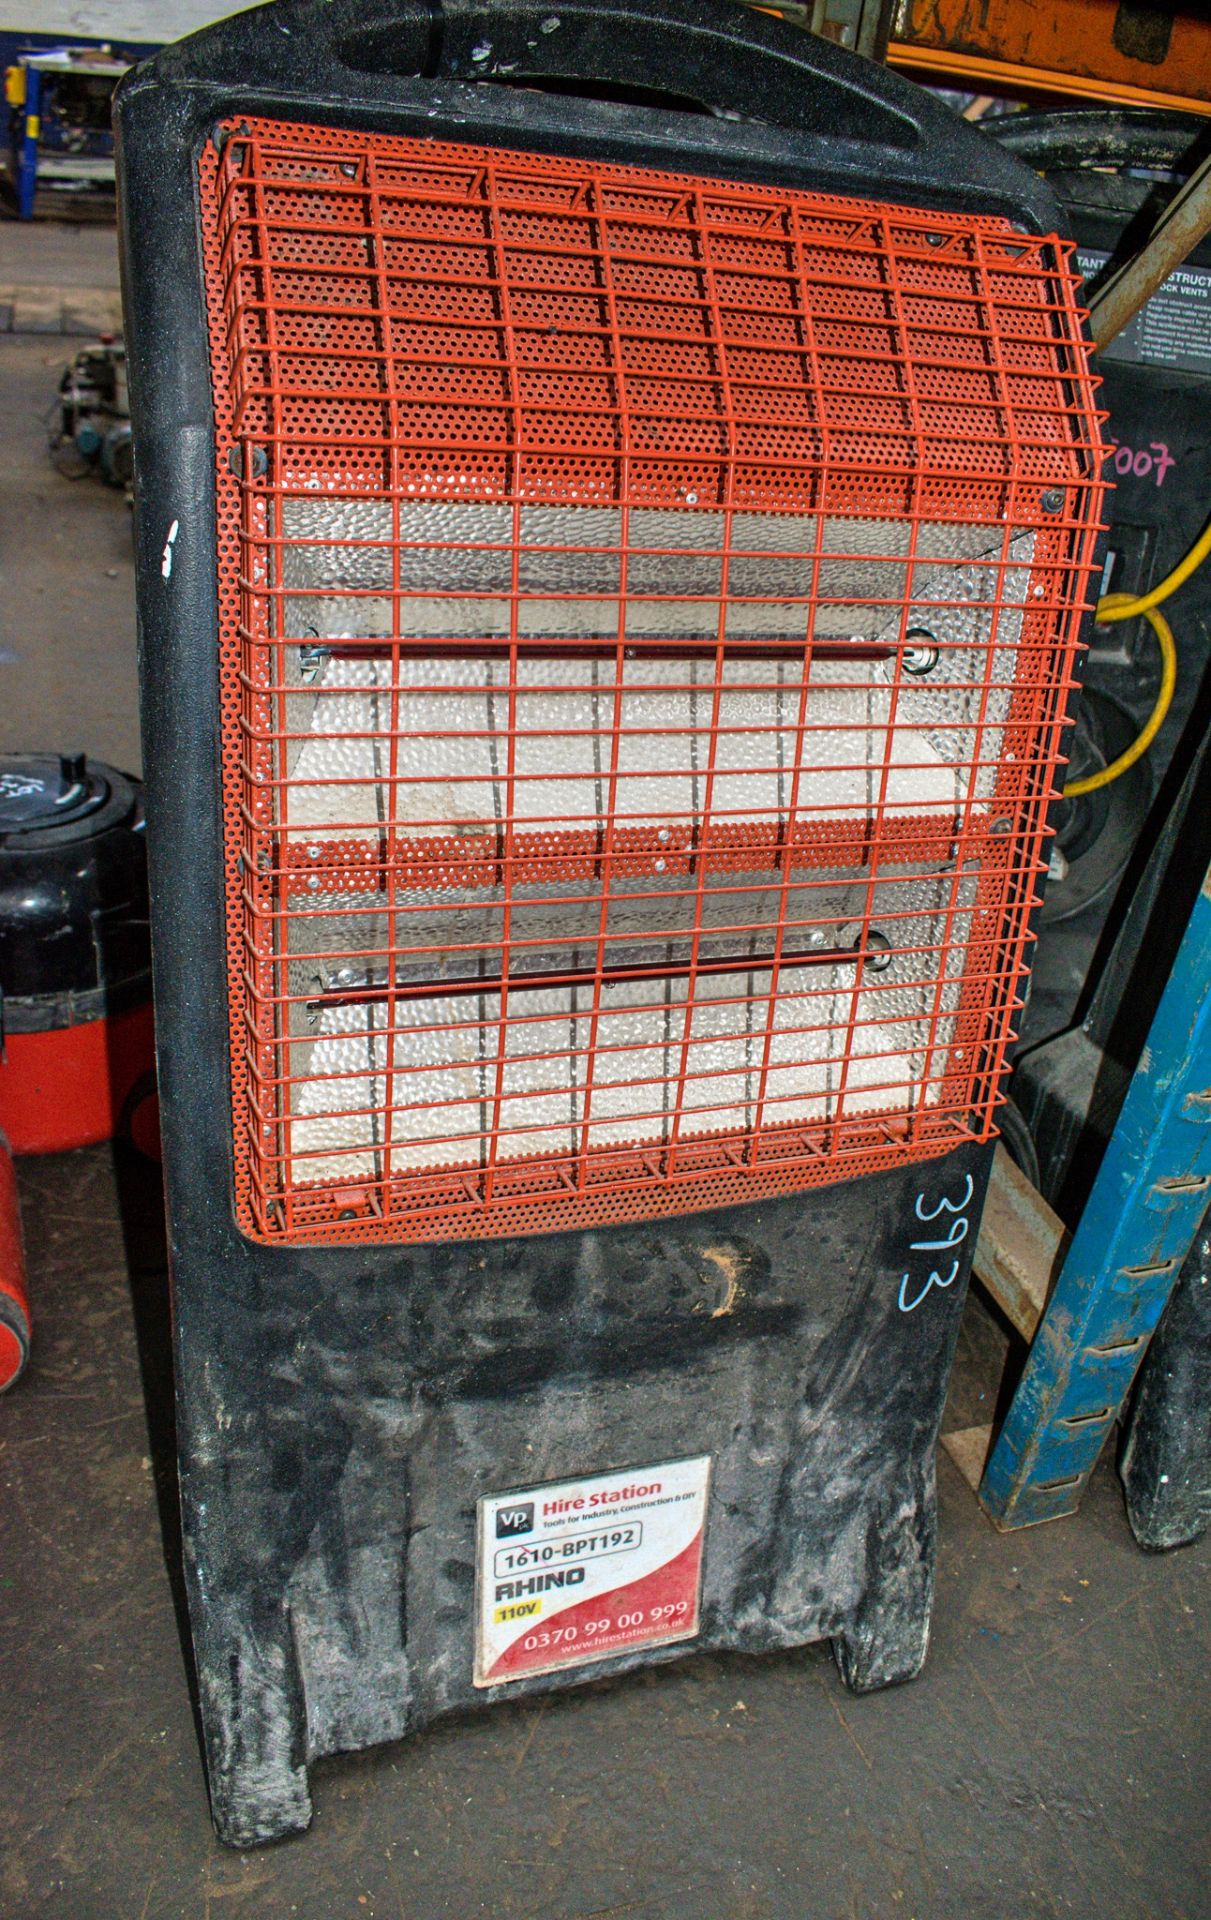 Rhino 110v infra red heater